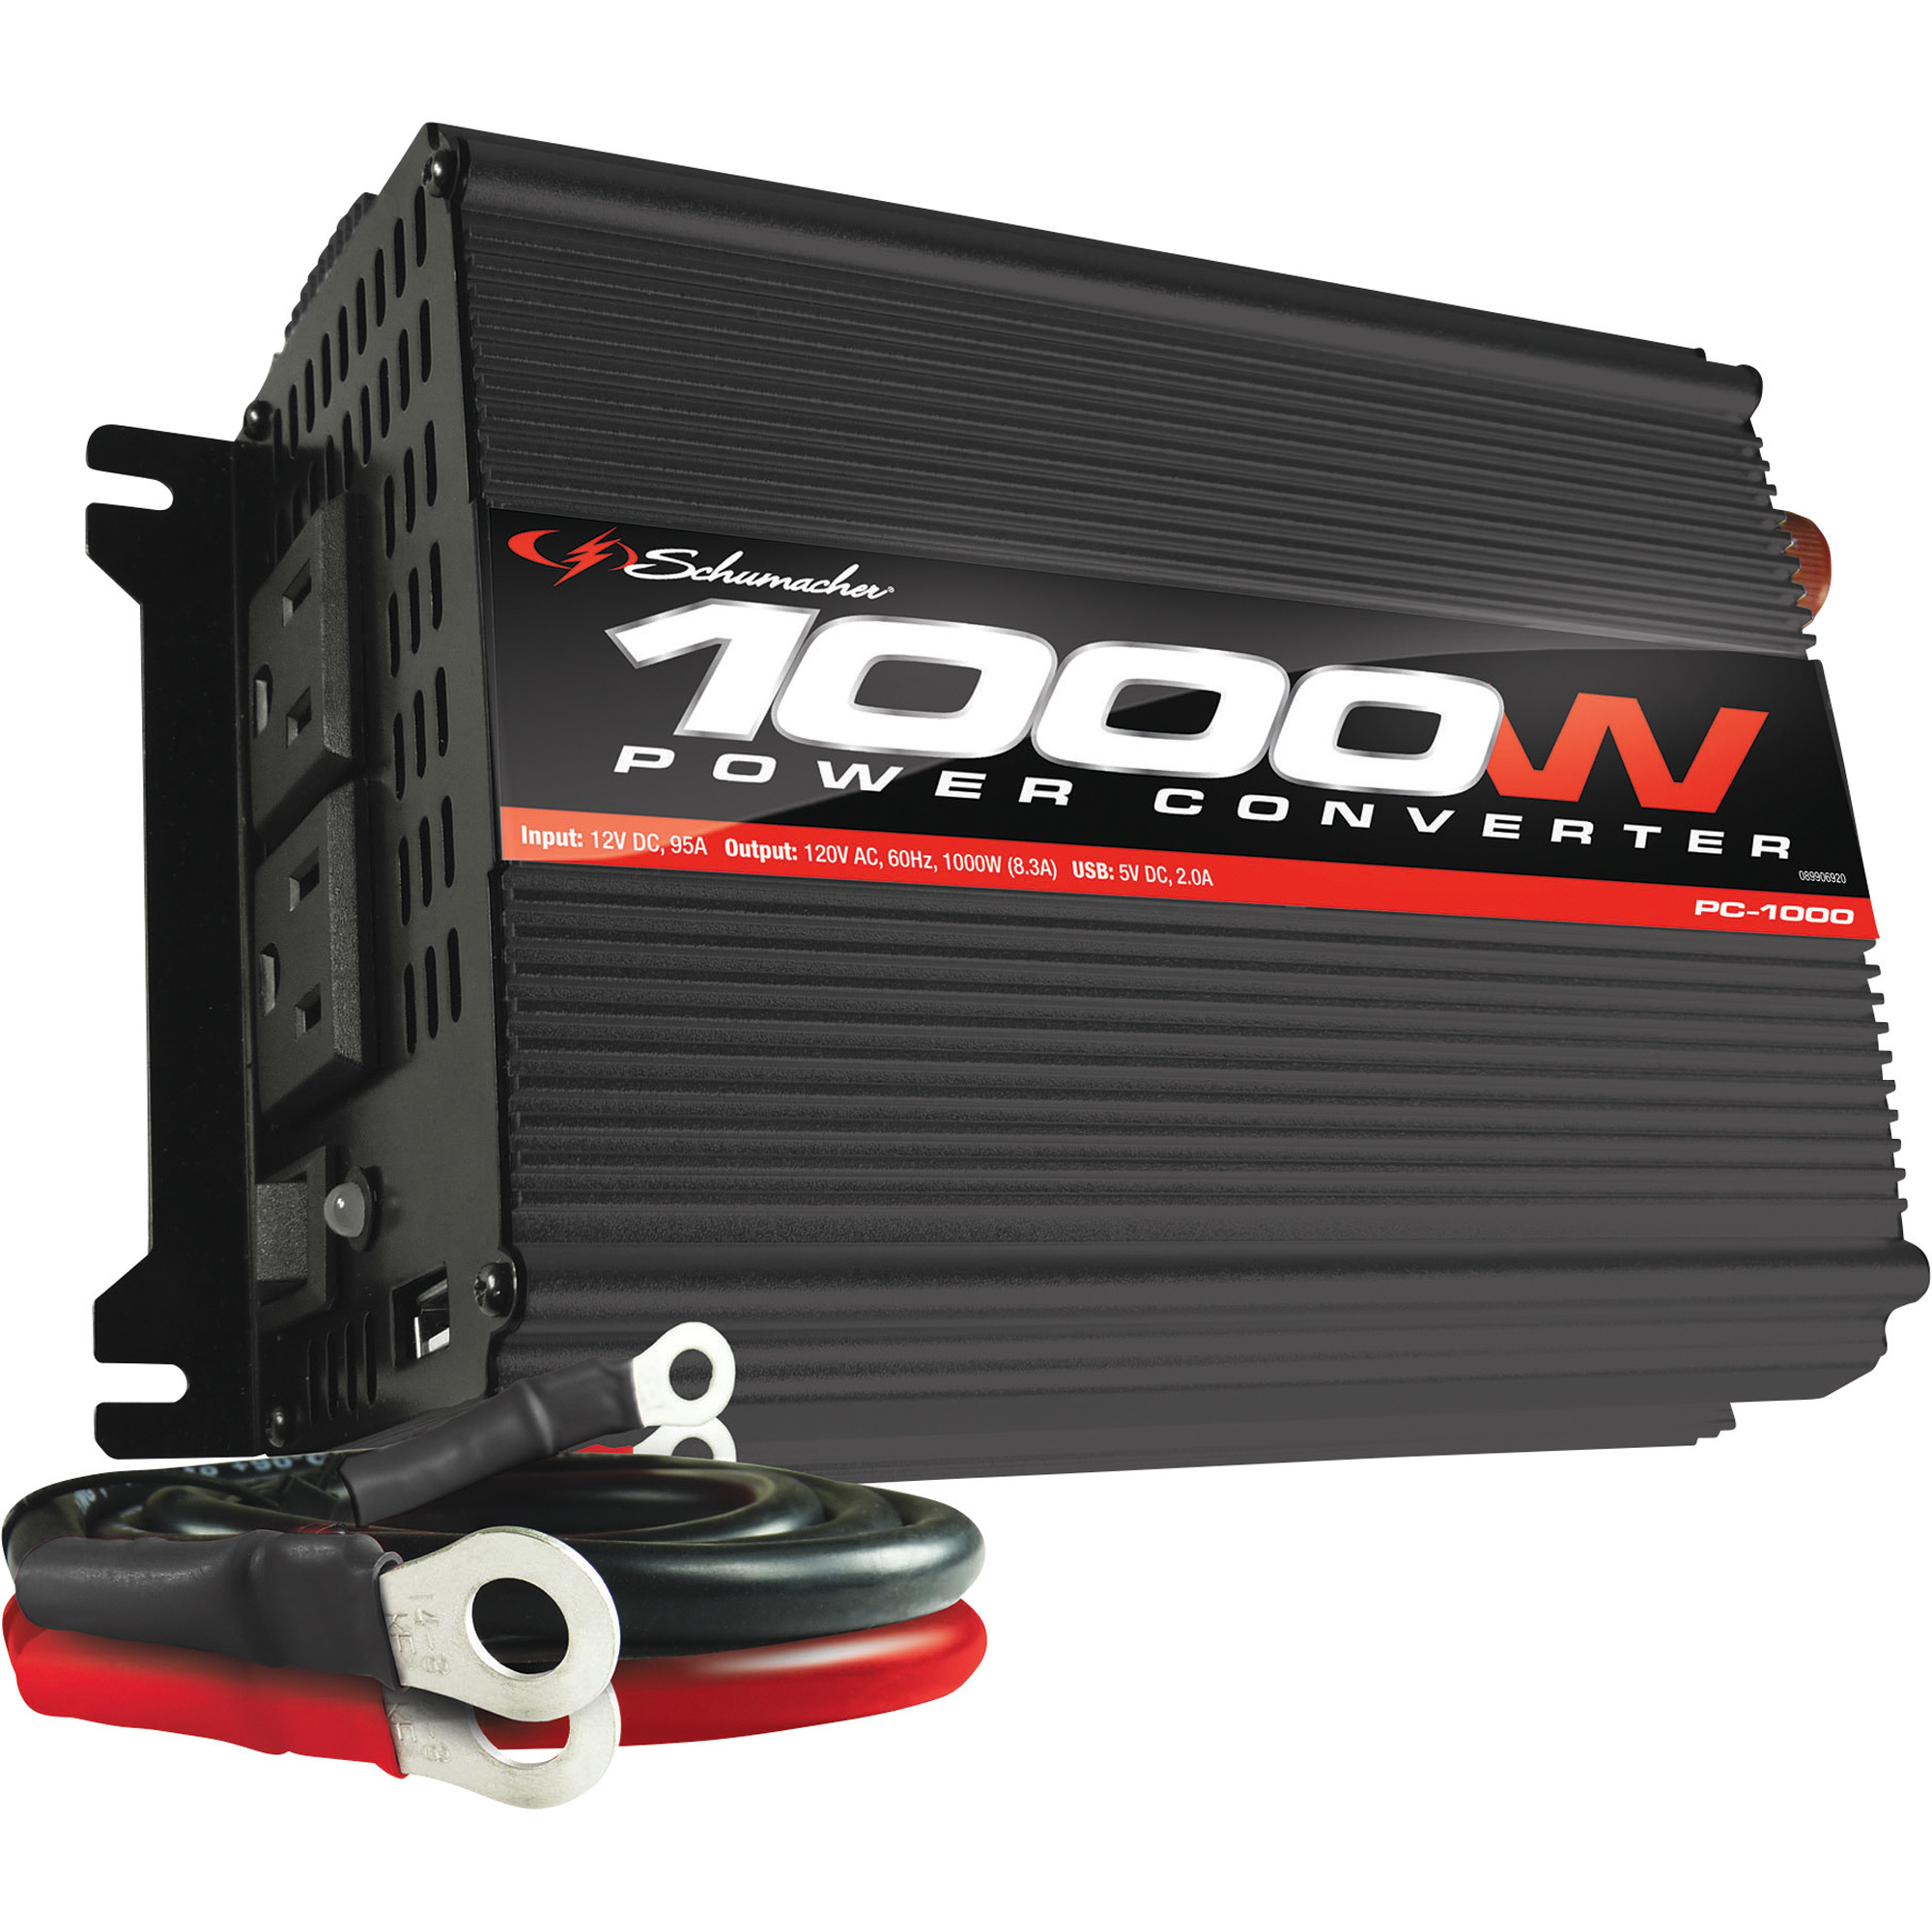 Schumacher Modified Sine Wave Power Converter with Cables â 1000 Watts, 2 AC Outlets/1 USB Port, Model PC-1000